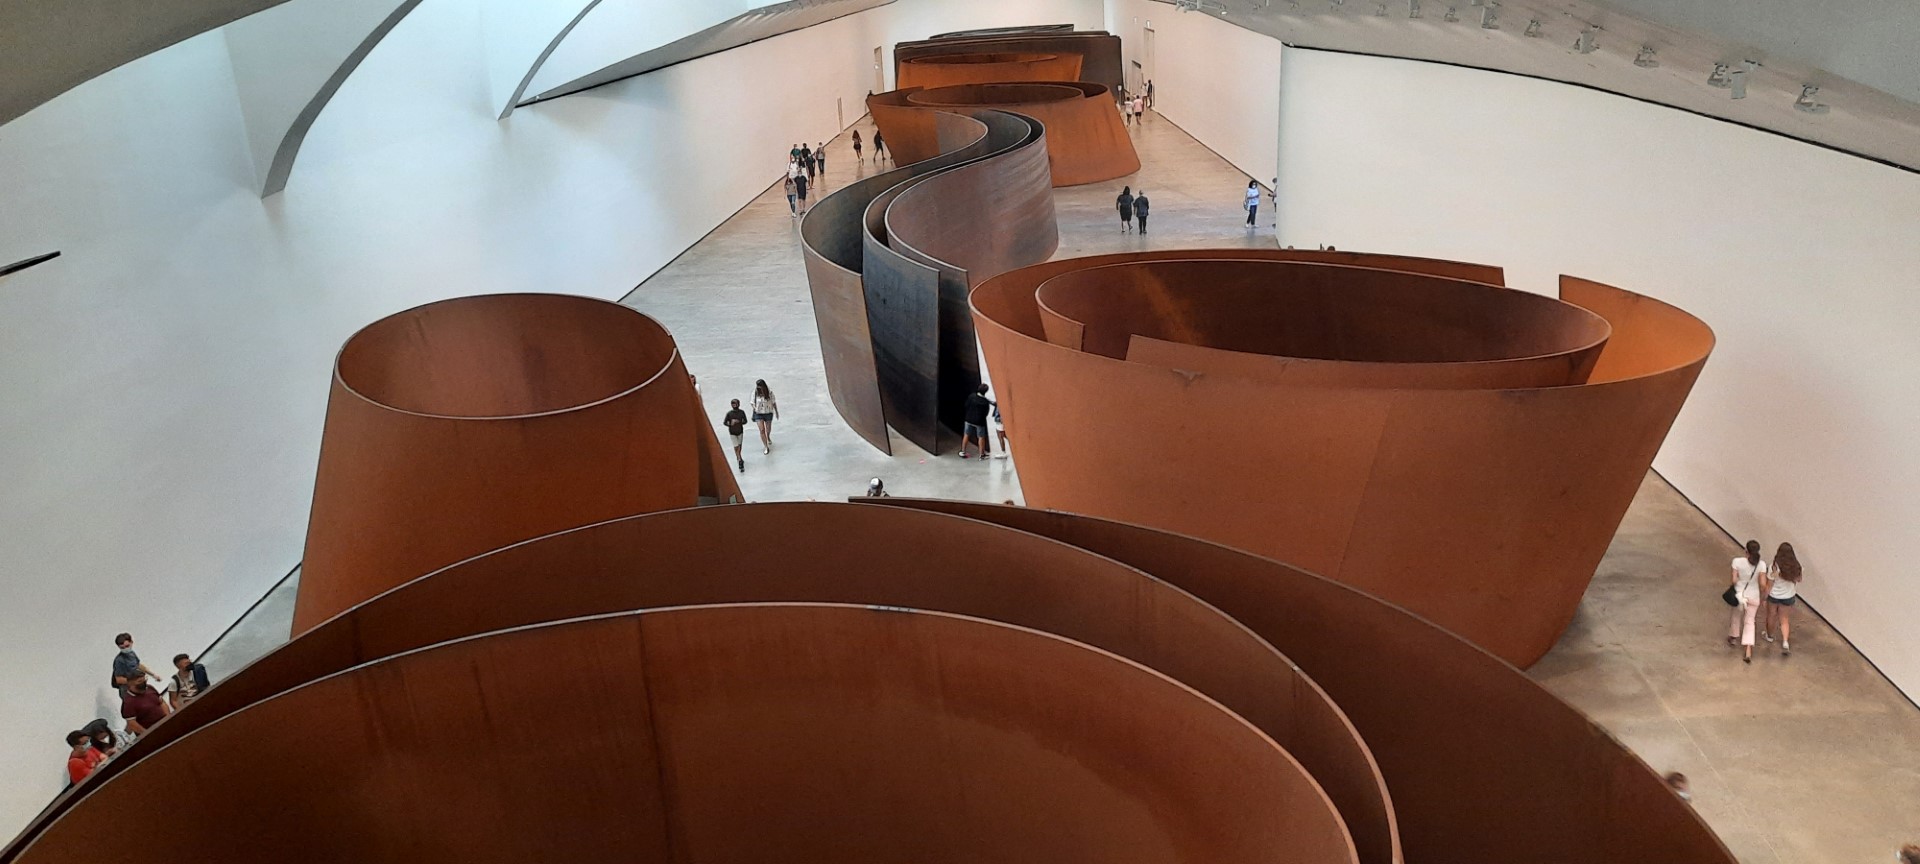 Guggenheim museum...